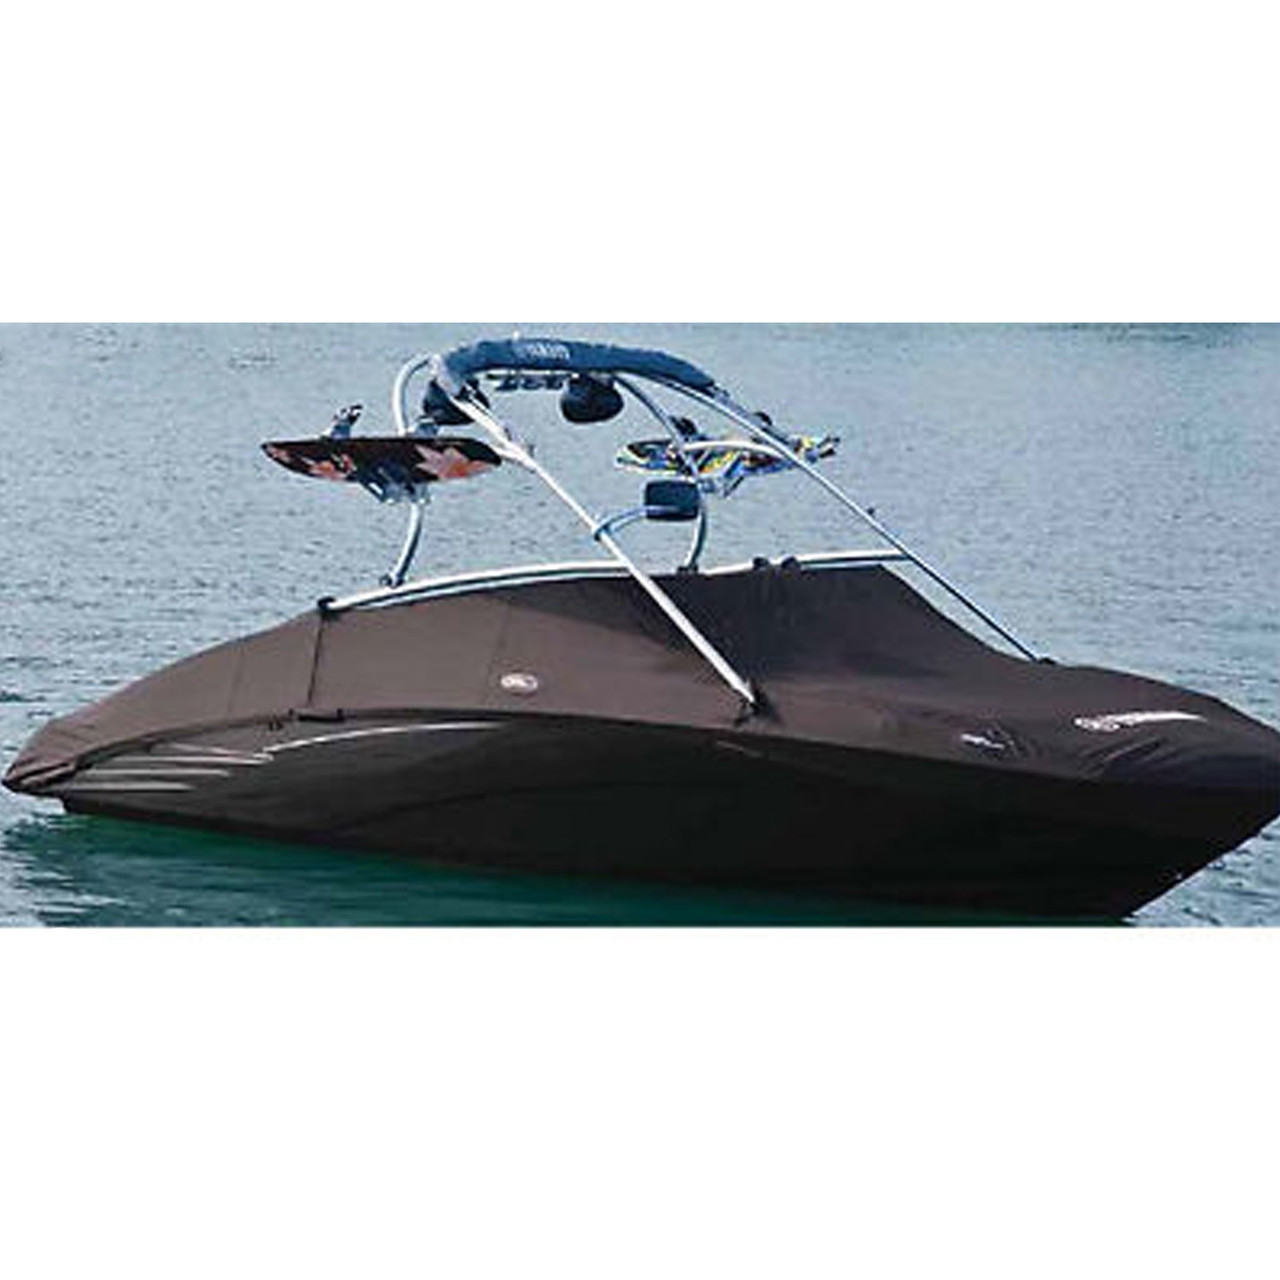 Yamaha New OEM SX 190 Series Sport Boat Mooring or Travel Cover MAR-190BK-NT-14